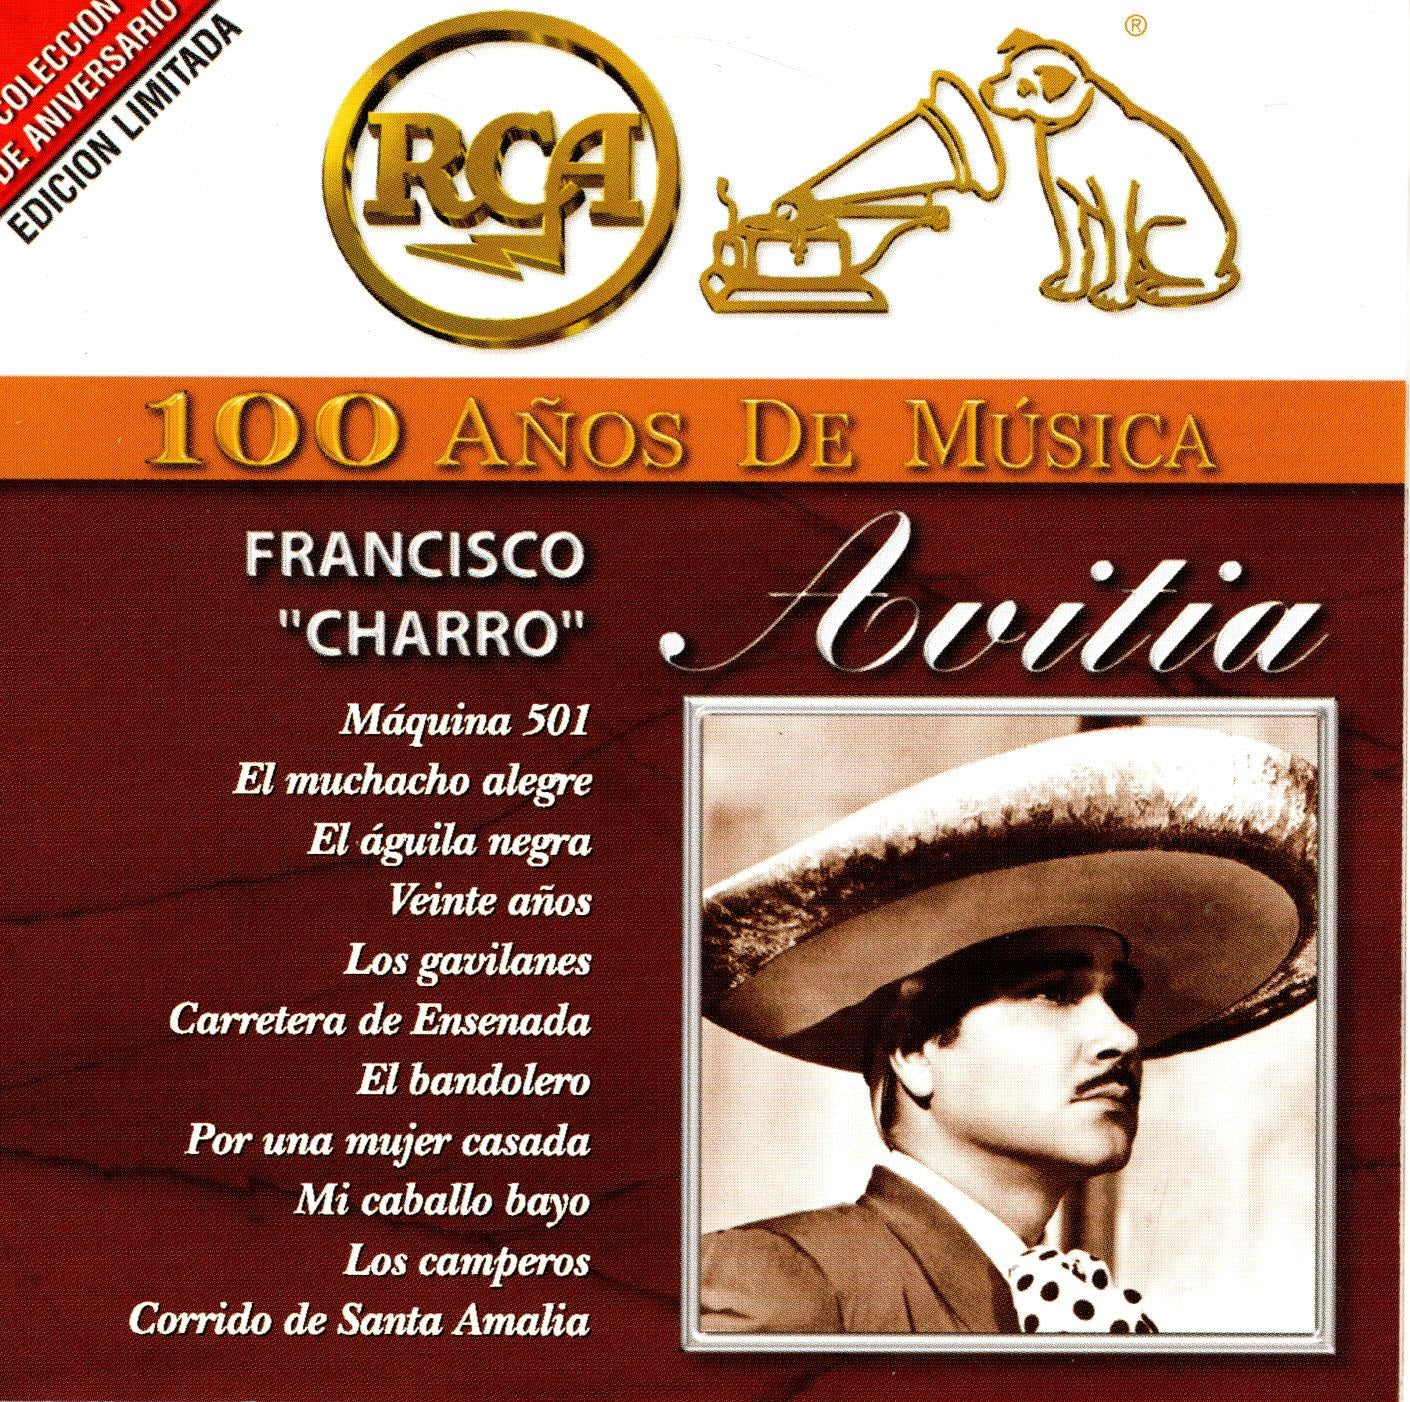 CD x2 RCA 100 AÑOS MUSICA FRANCISCO "Charro" Avitia